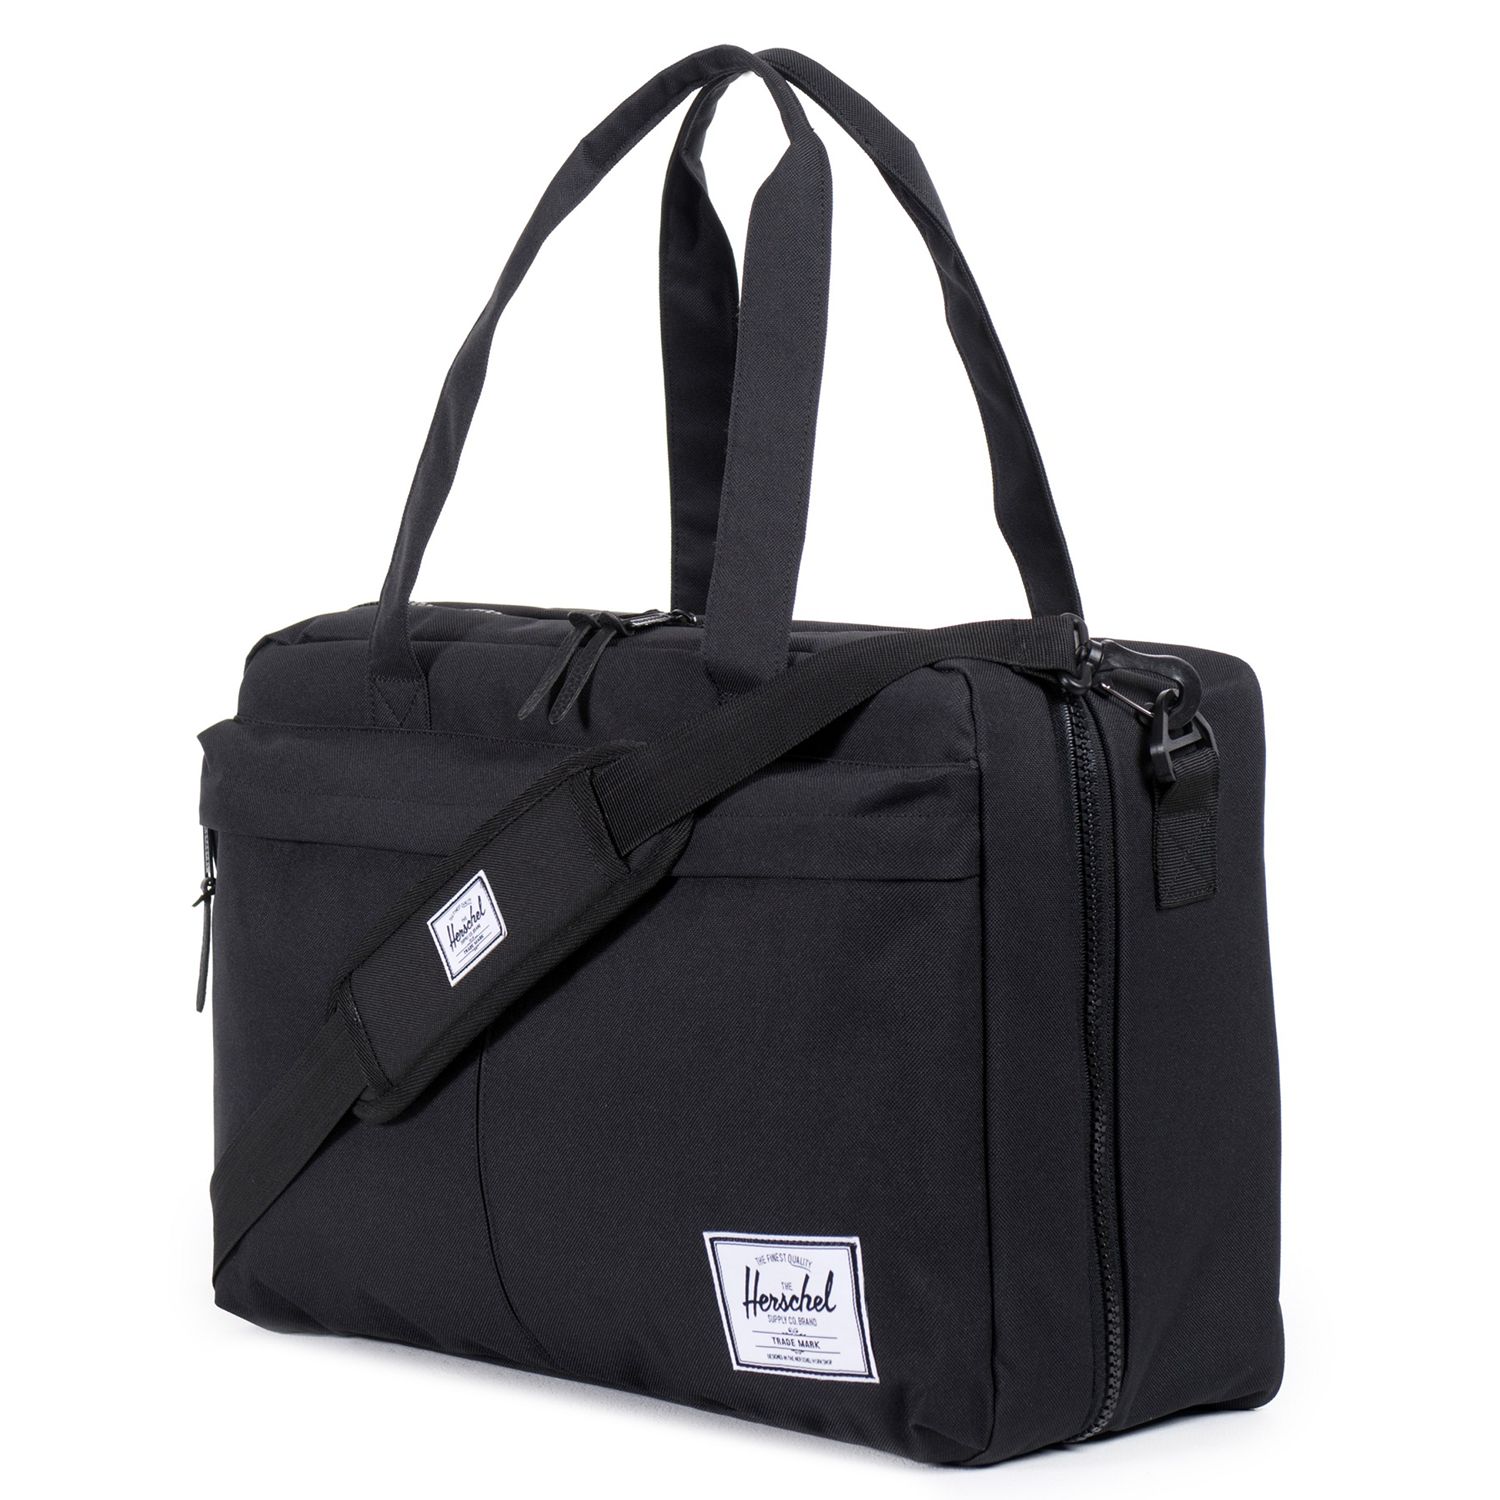 Herschel Supply Co. Bowen Travel Duffle Bag, Black at John Lewis & Partners